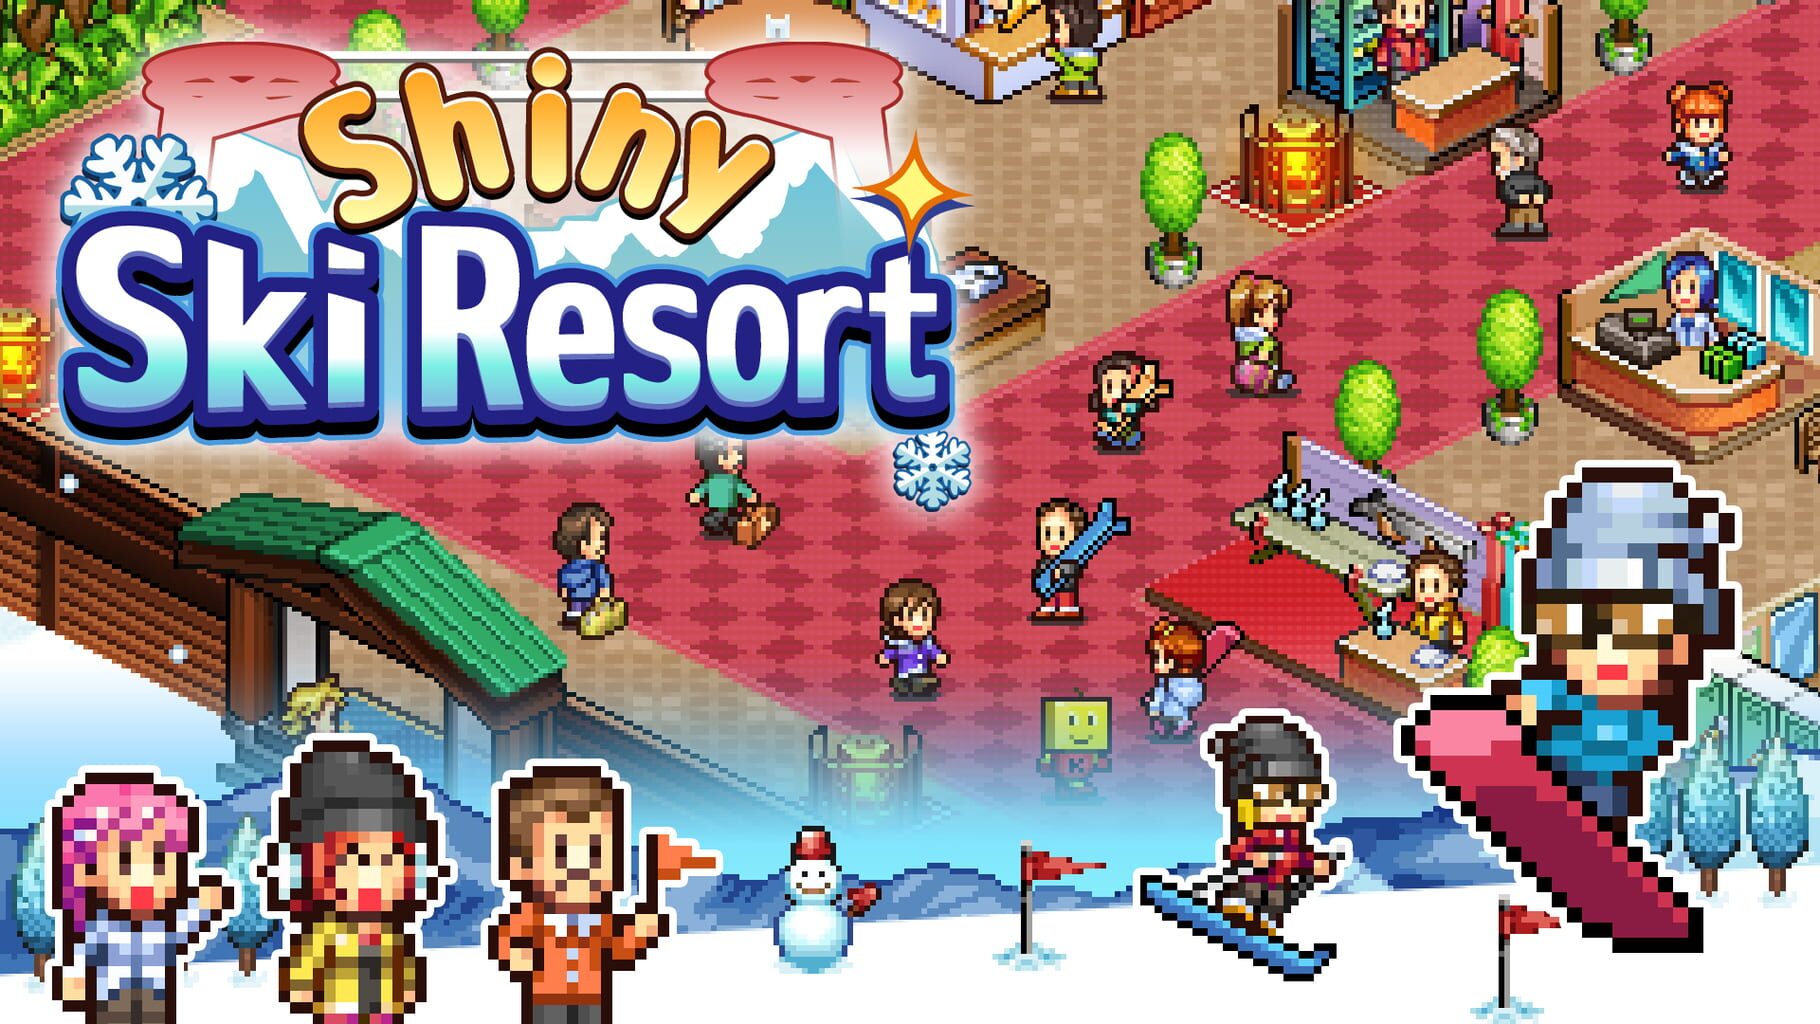 Shiny Ski Resort artwork